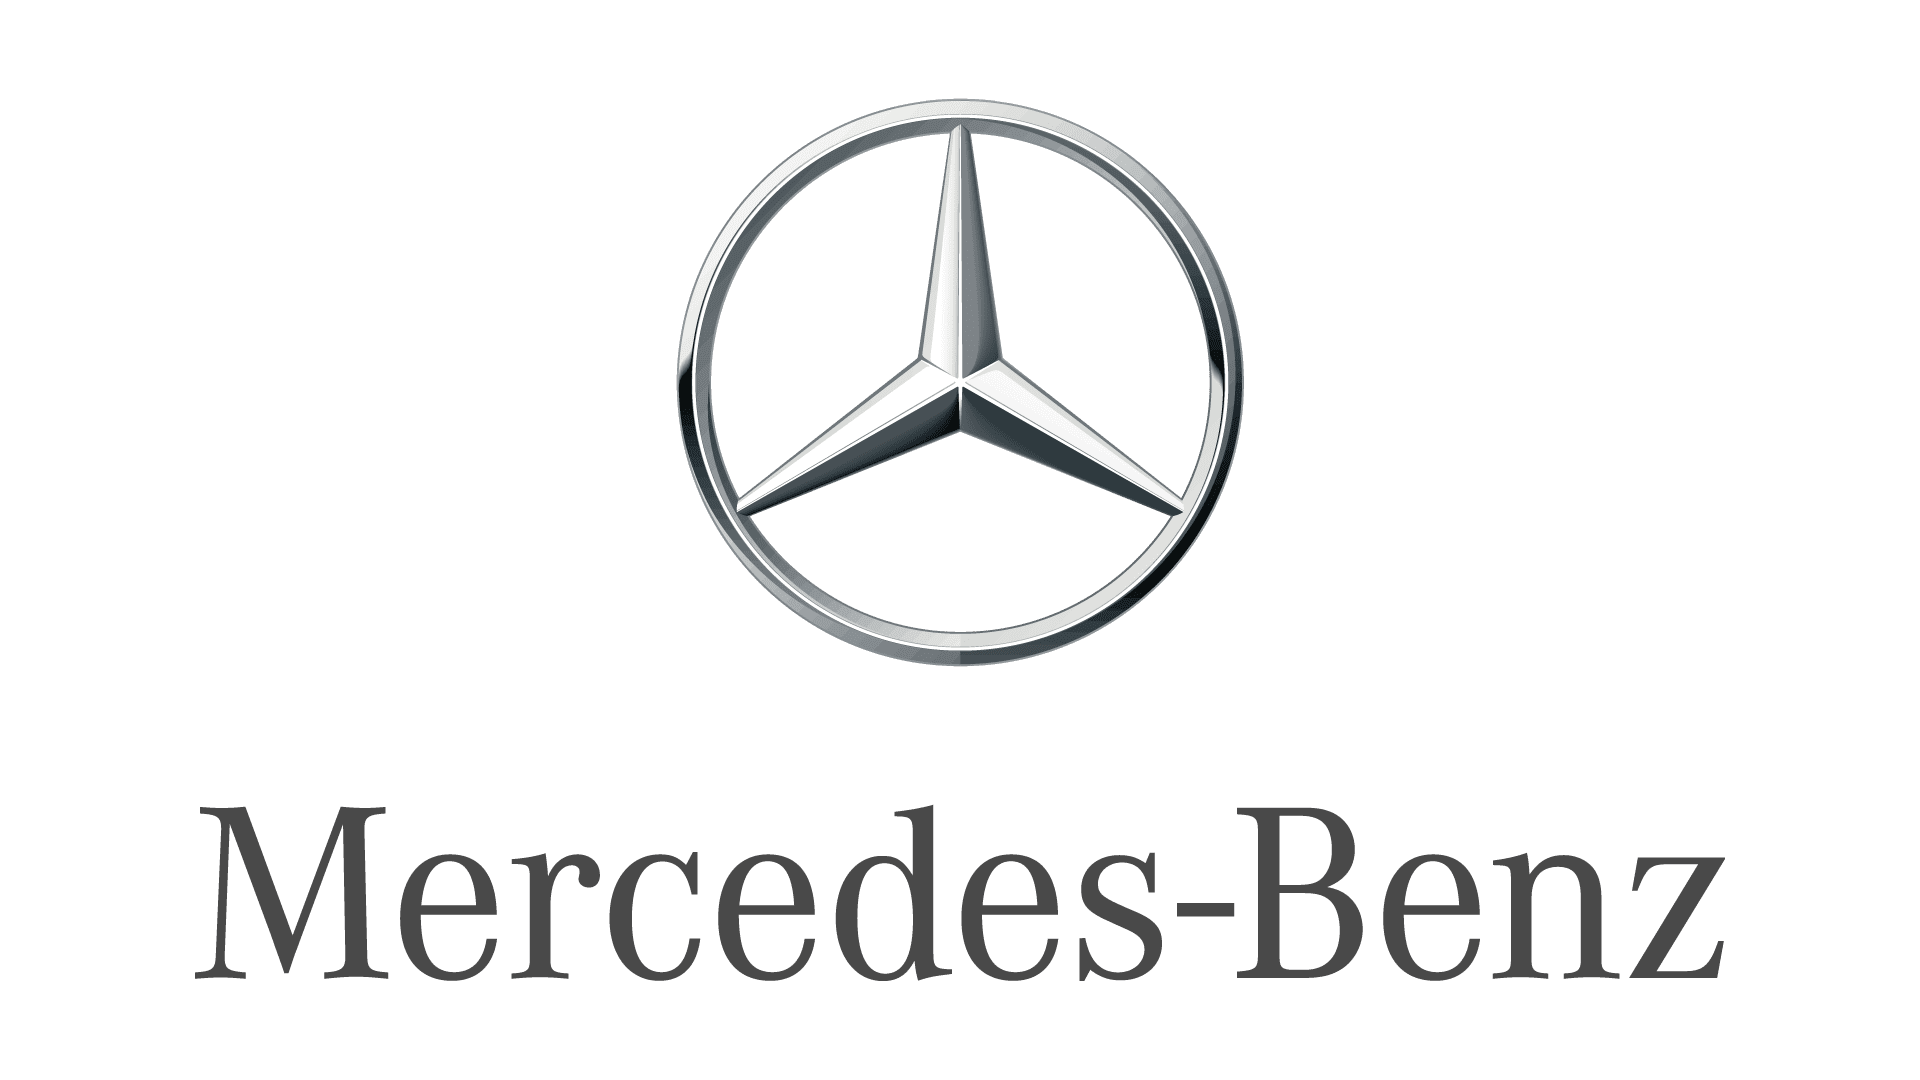 Безпека Mercedes-Benz GLC Купе Пакети обладнання функцій безпеки #2